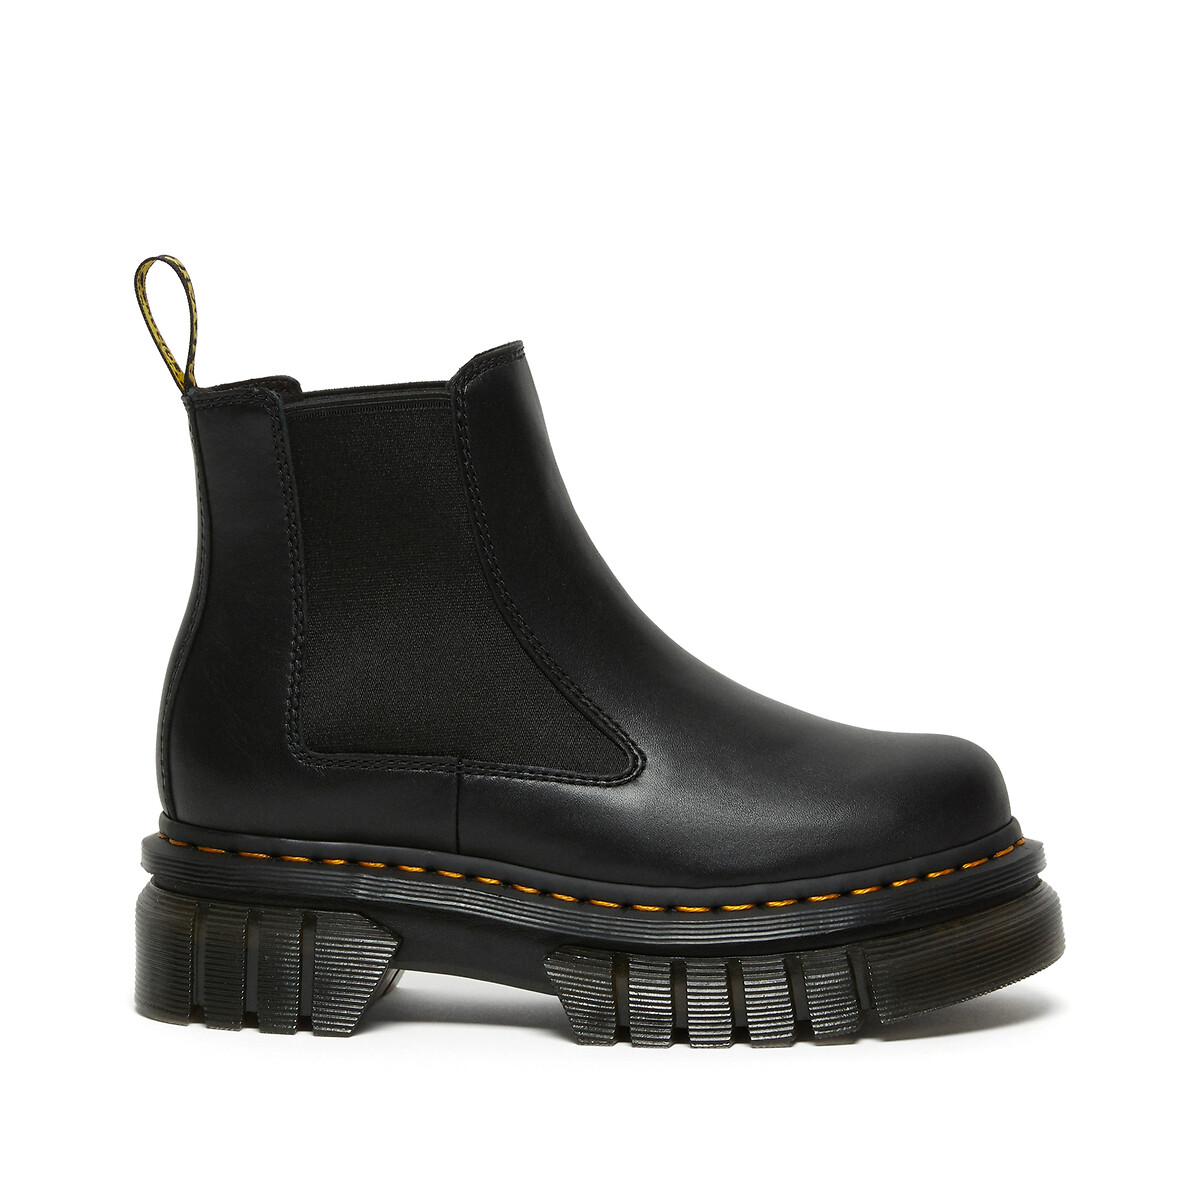 Audrick chelsea boots in leather, black, Dr. Martens | La Redoute